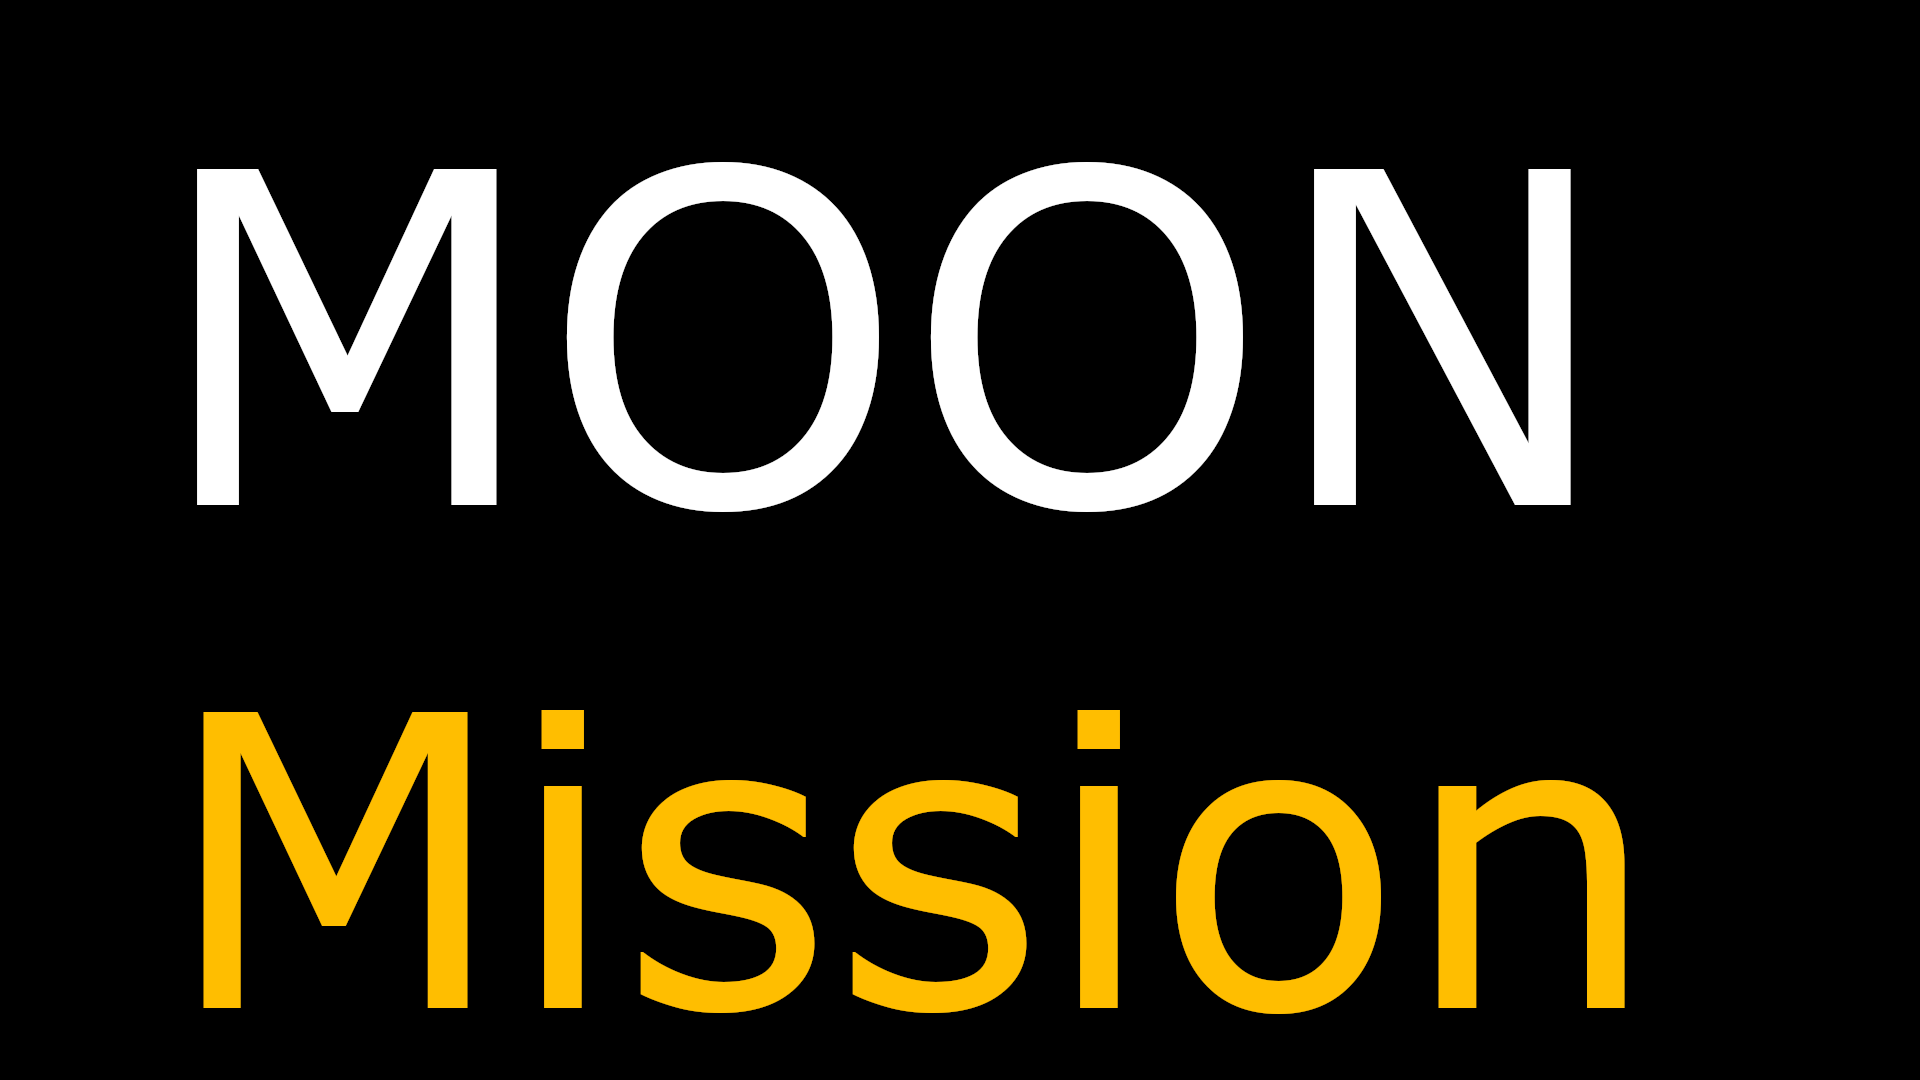 Moon mission